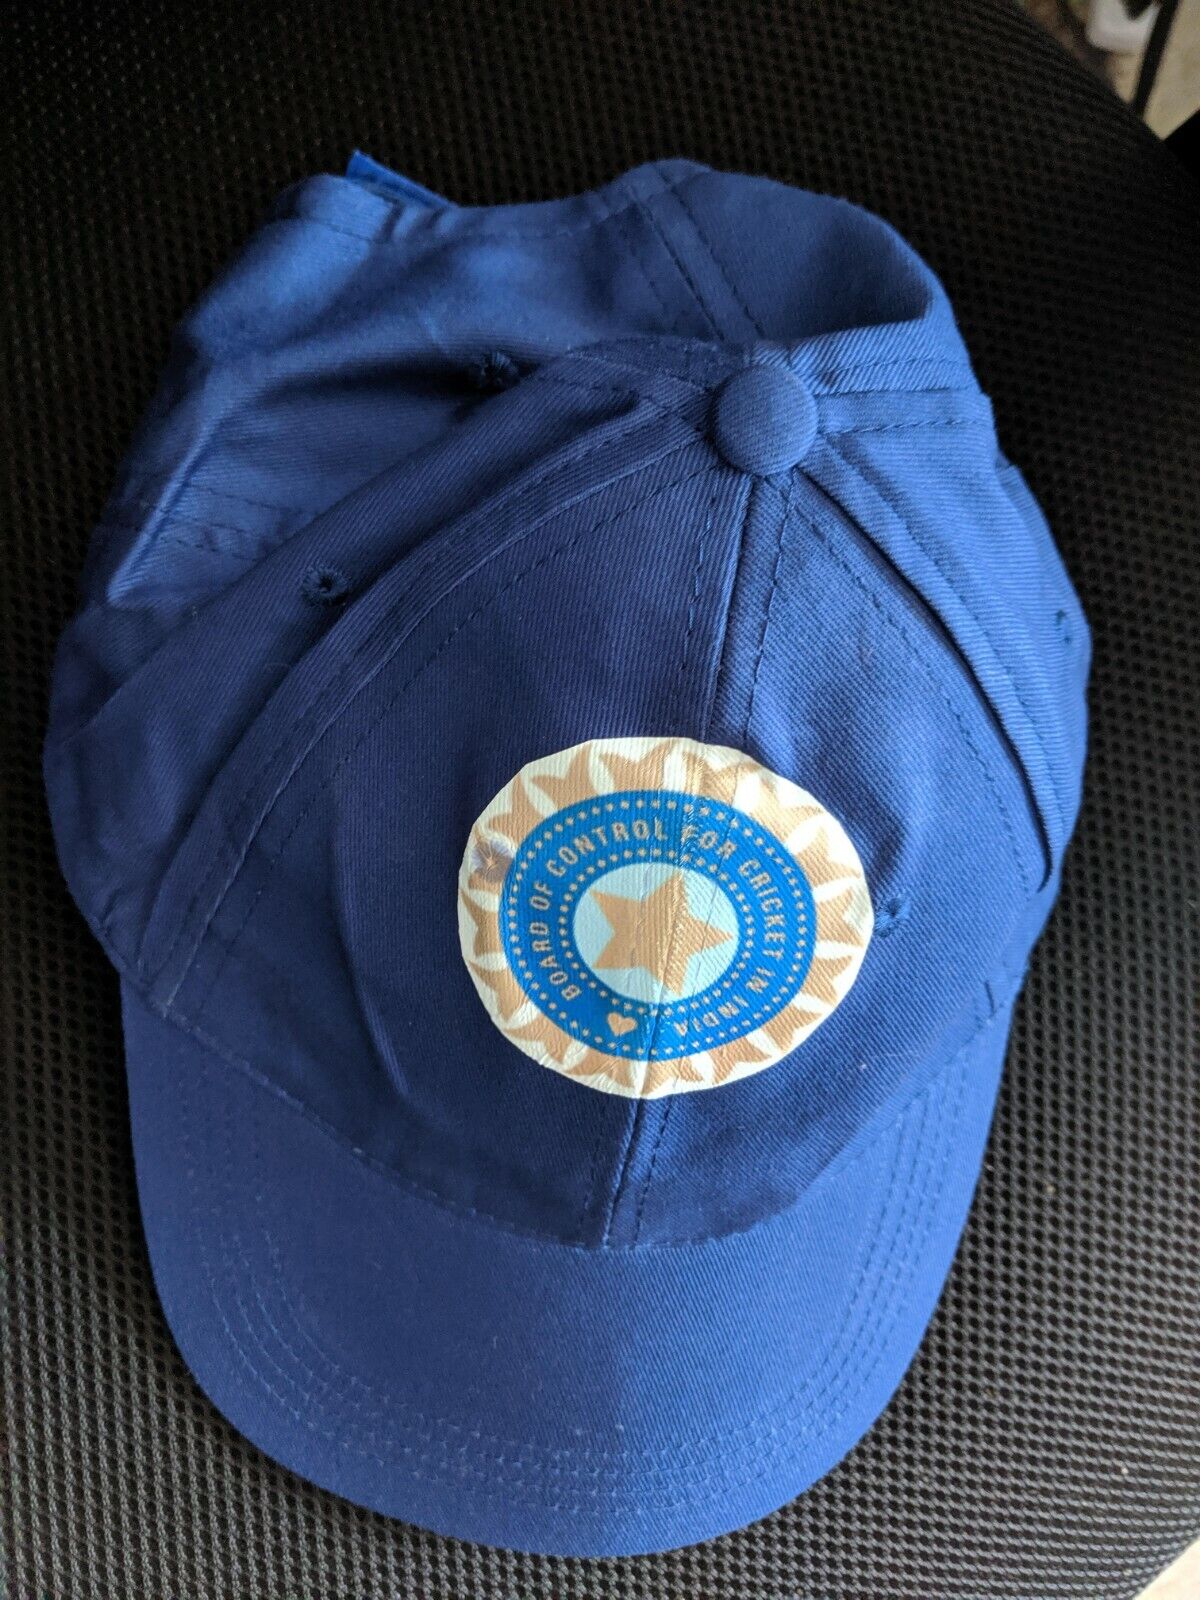 Cricket CAP BCCI LOGO INDIA | eBay